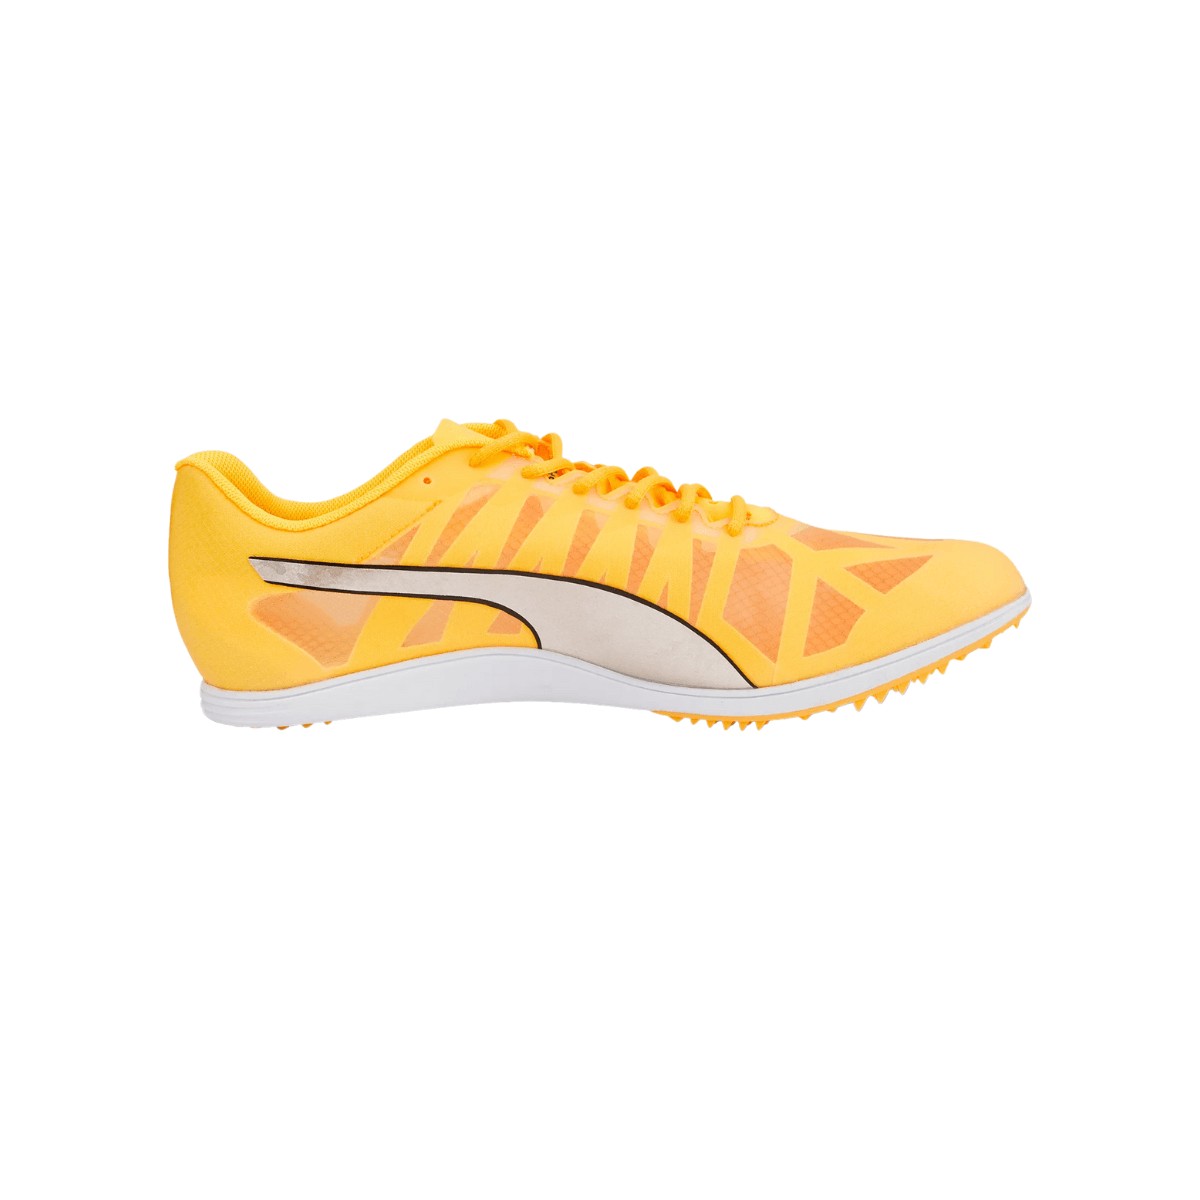 Puma EvoSpeed Distance 10 Shoes Yellow AW22, Size 38 - EUR